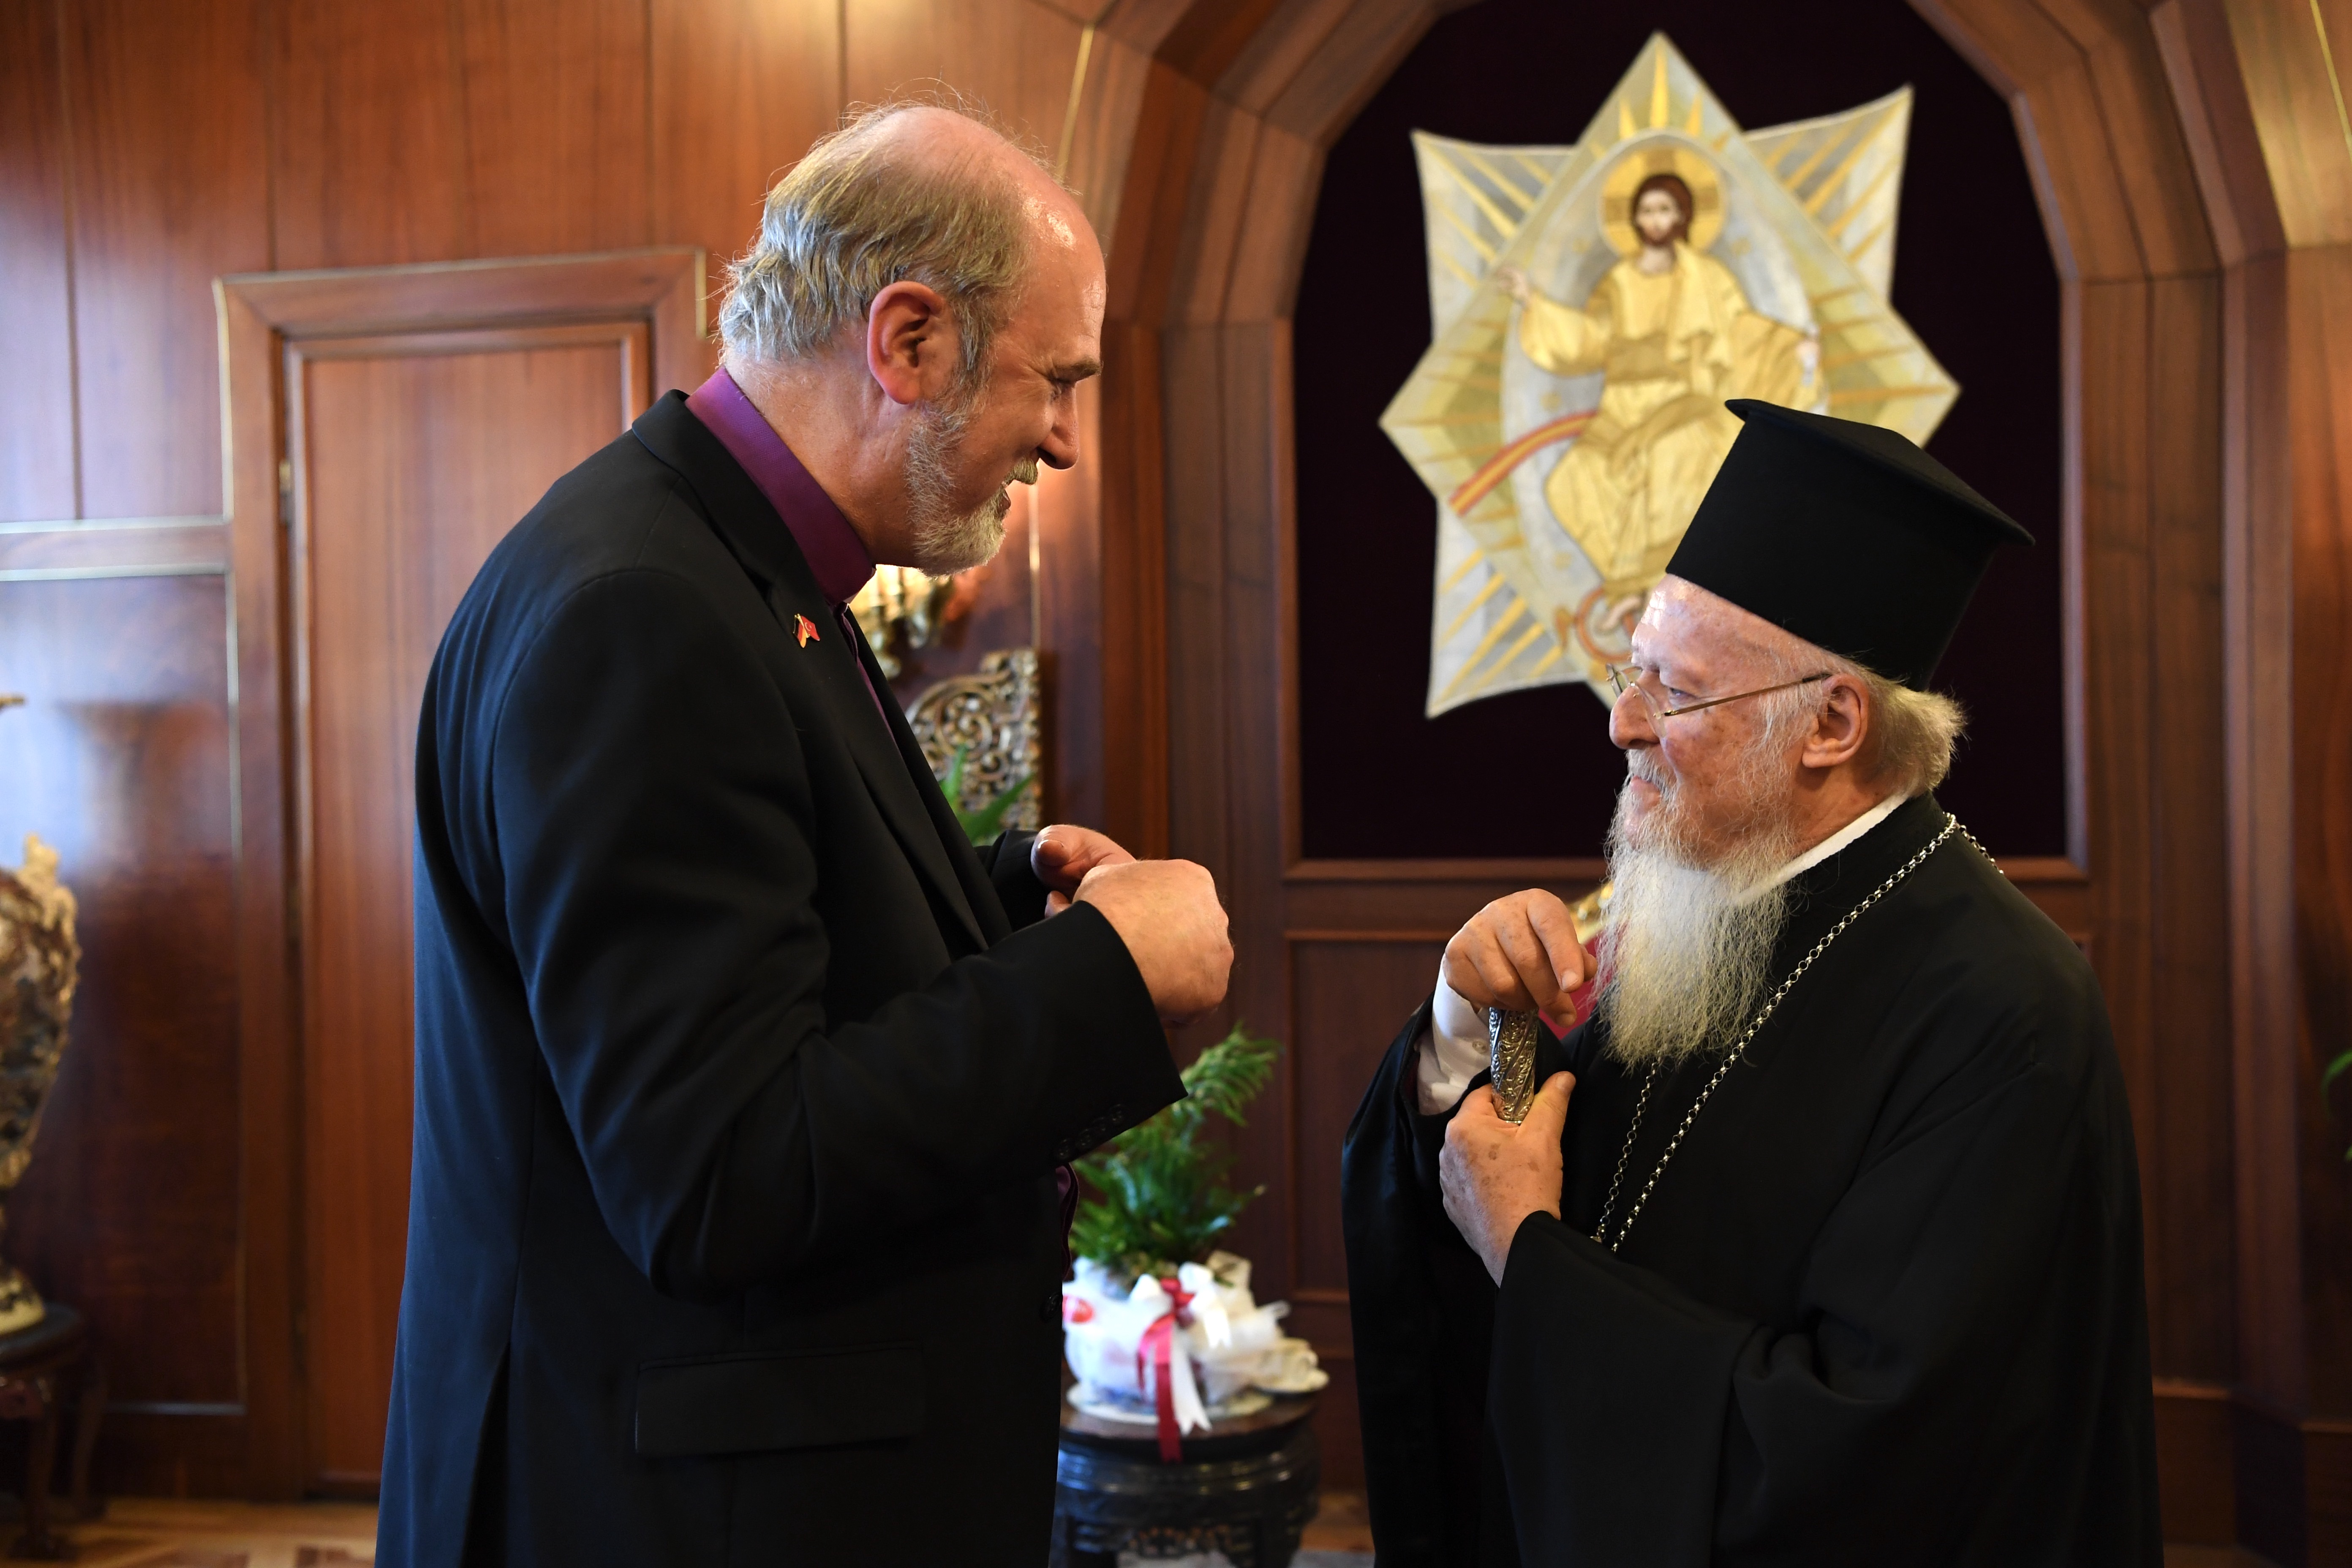 Thomas Schirrmacher and the Ecumenical Patriarch Bartholomew